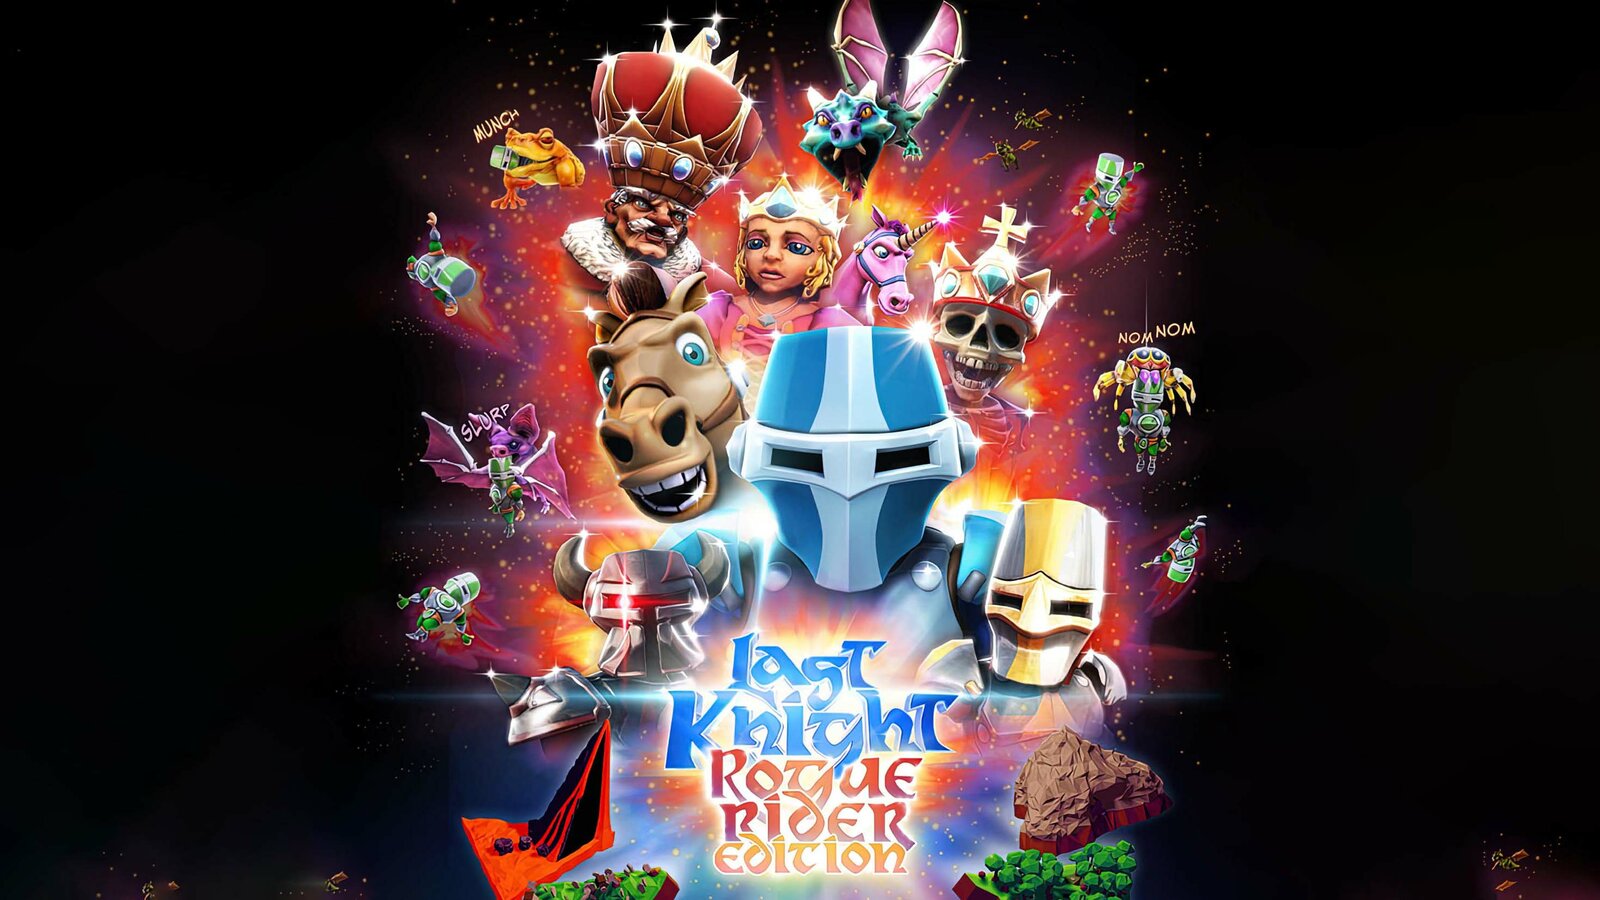 Last Knight - Rogue Rider Edition